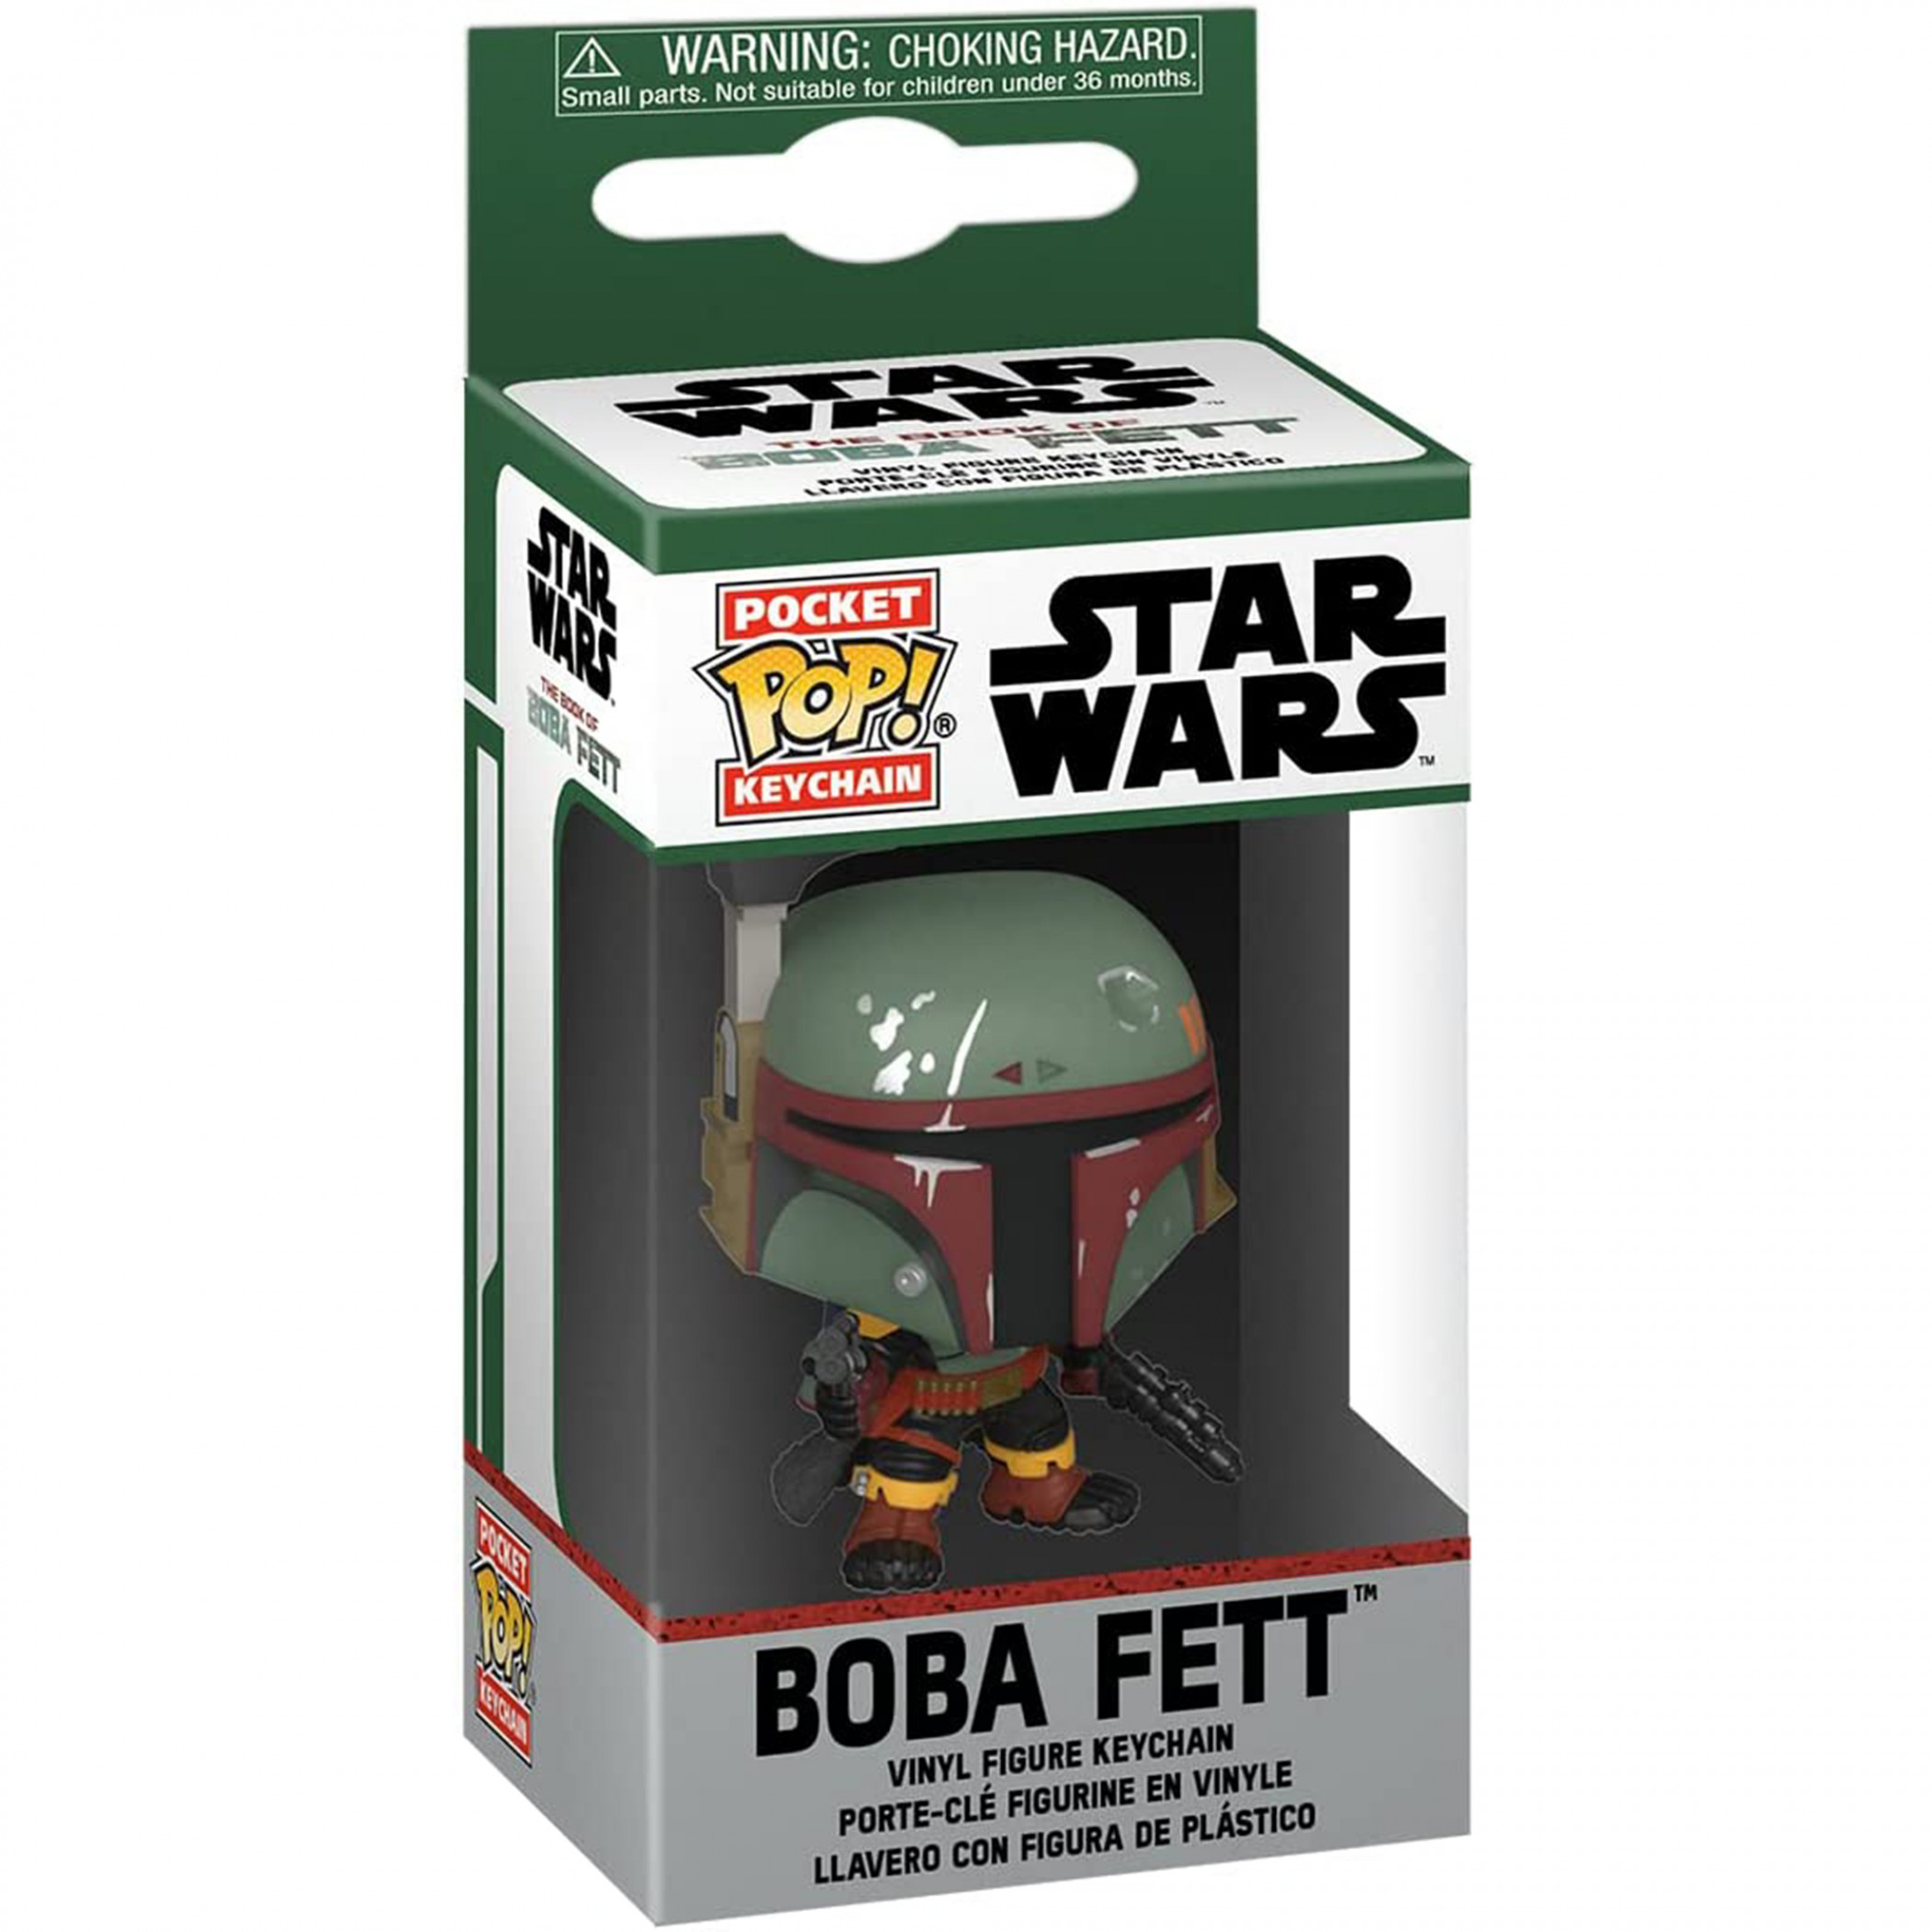 Star Wars Book of Boba Fett Series Boba Fett Funko Pop! Vinyl Keychain